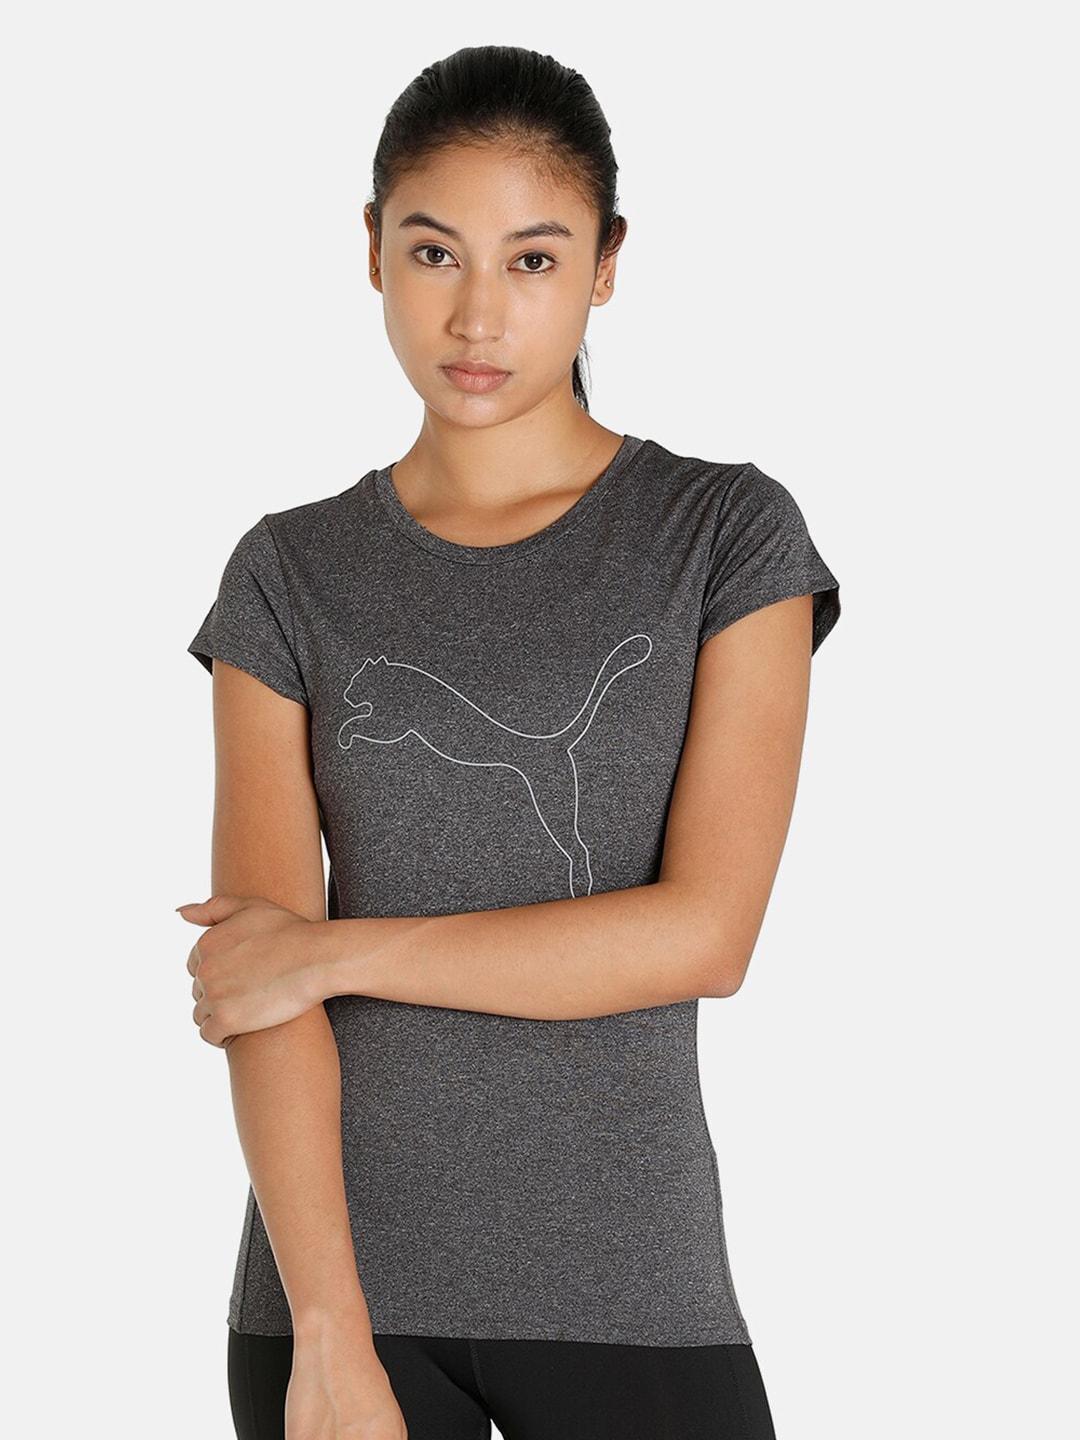 Puma Women Grey Brand Logo Printed Slim Fit Training or Gym T-shirt